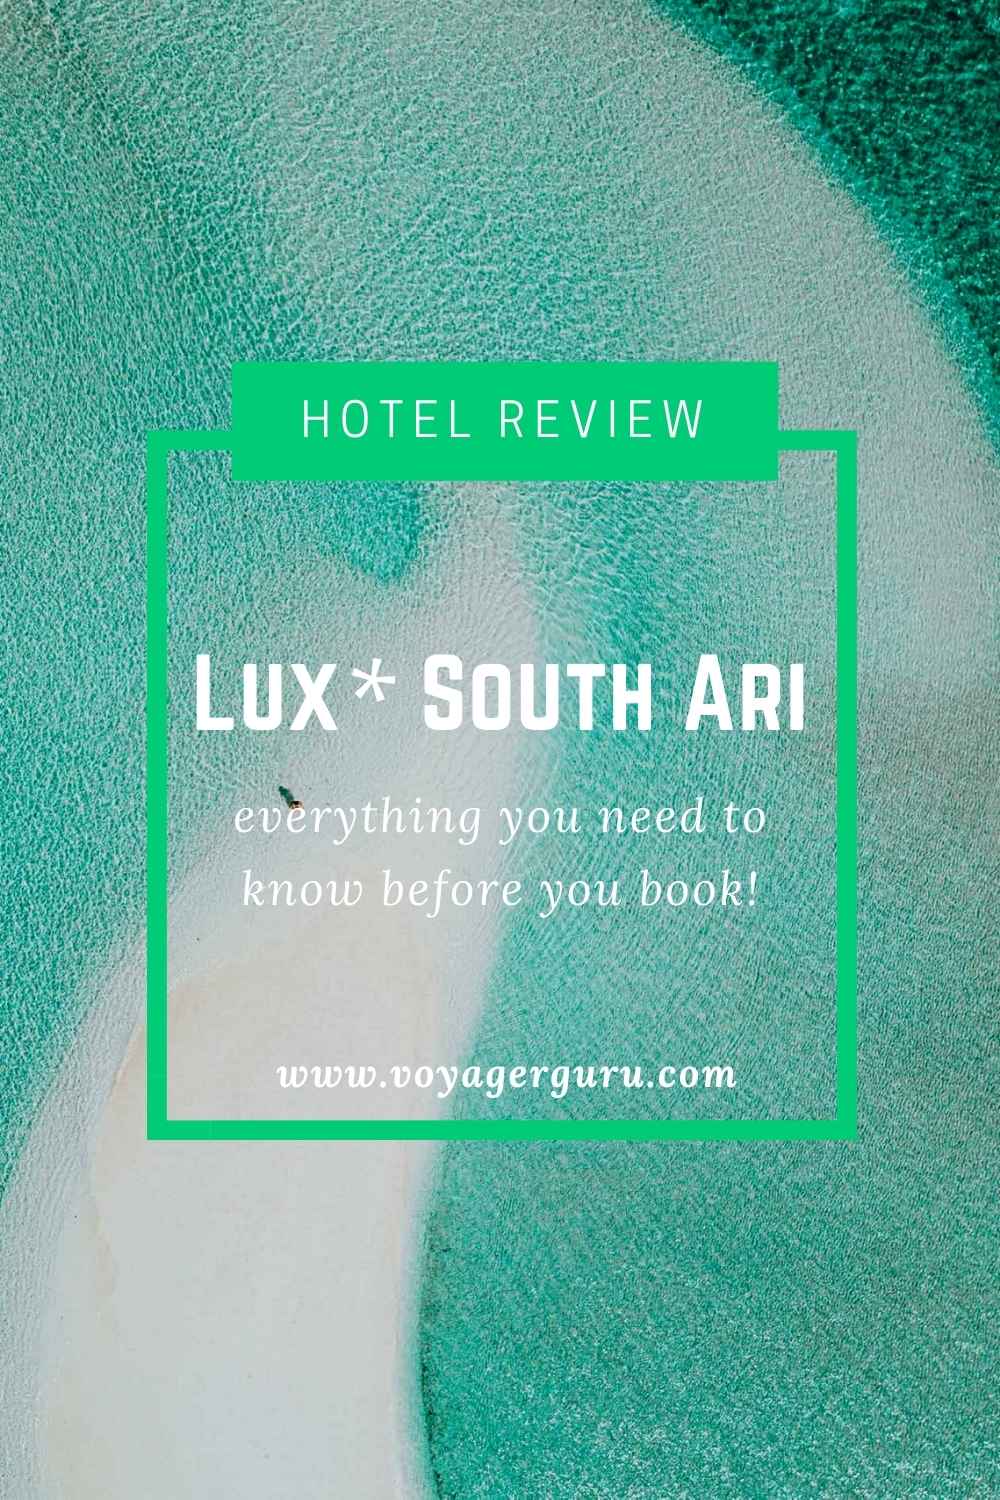 lux south ari maldives hotel review pin 6